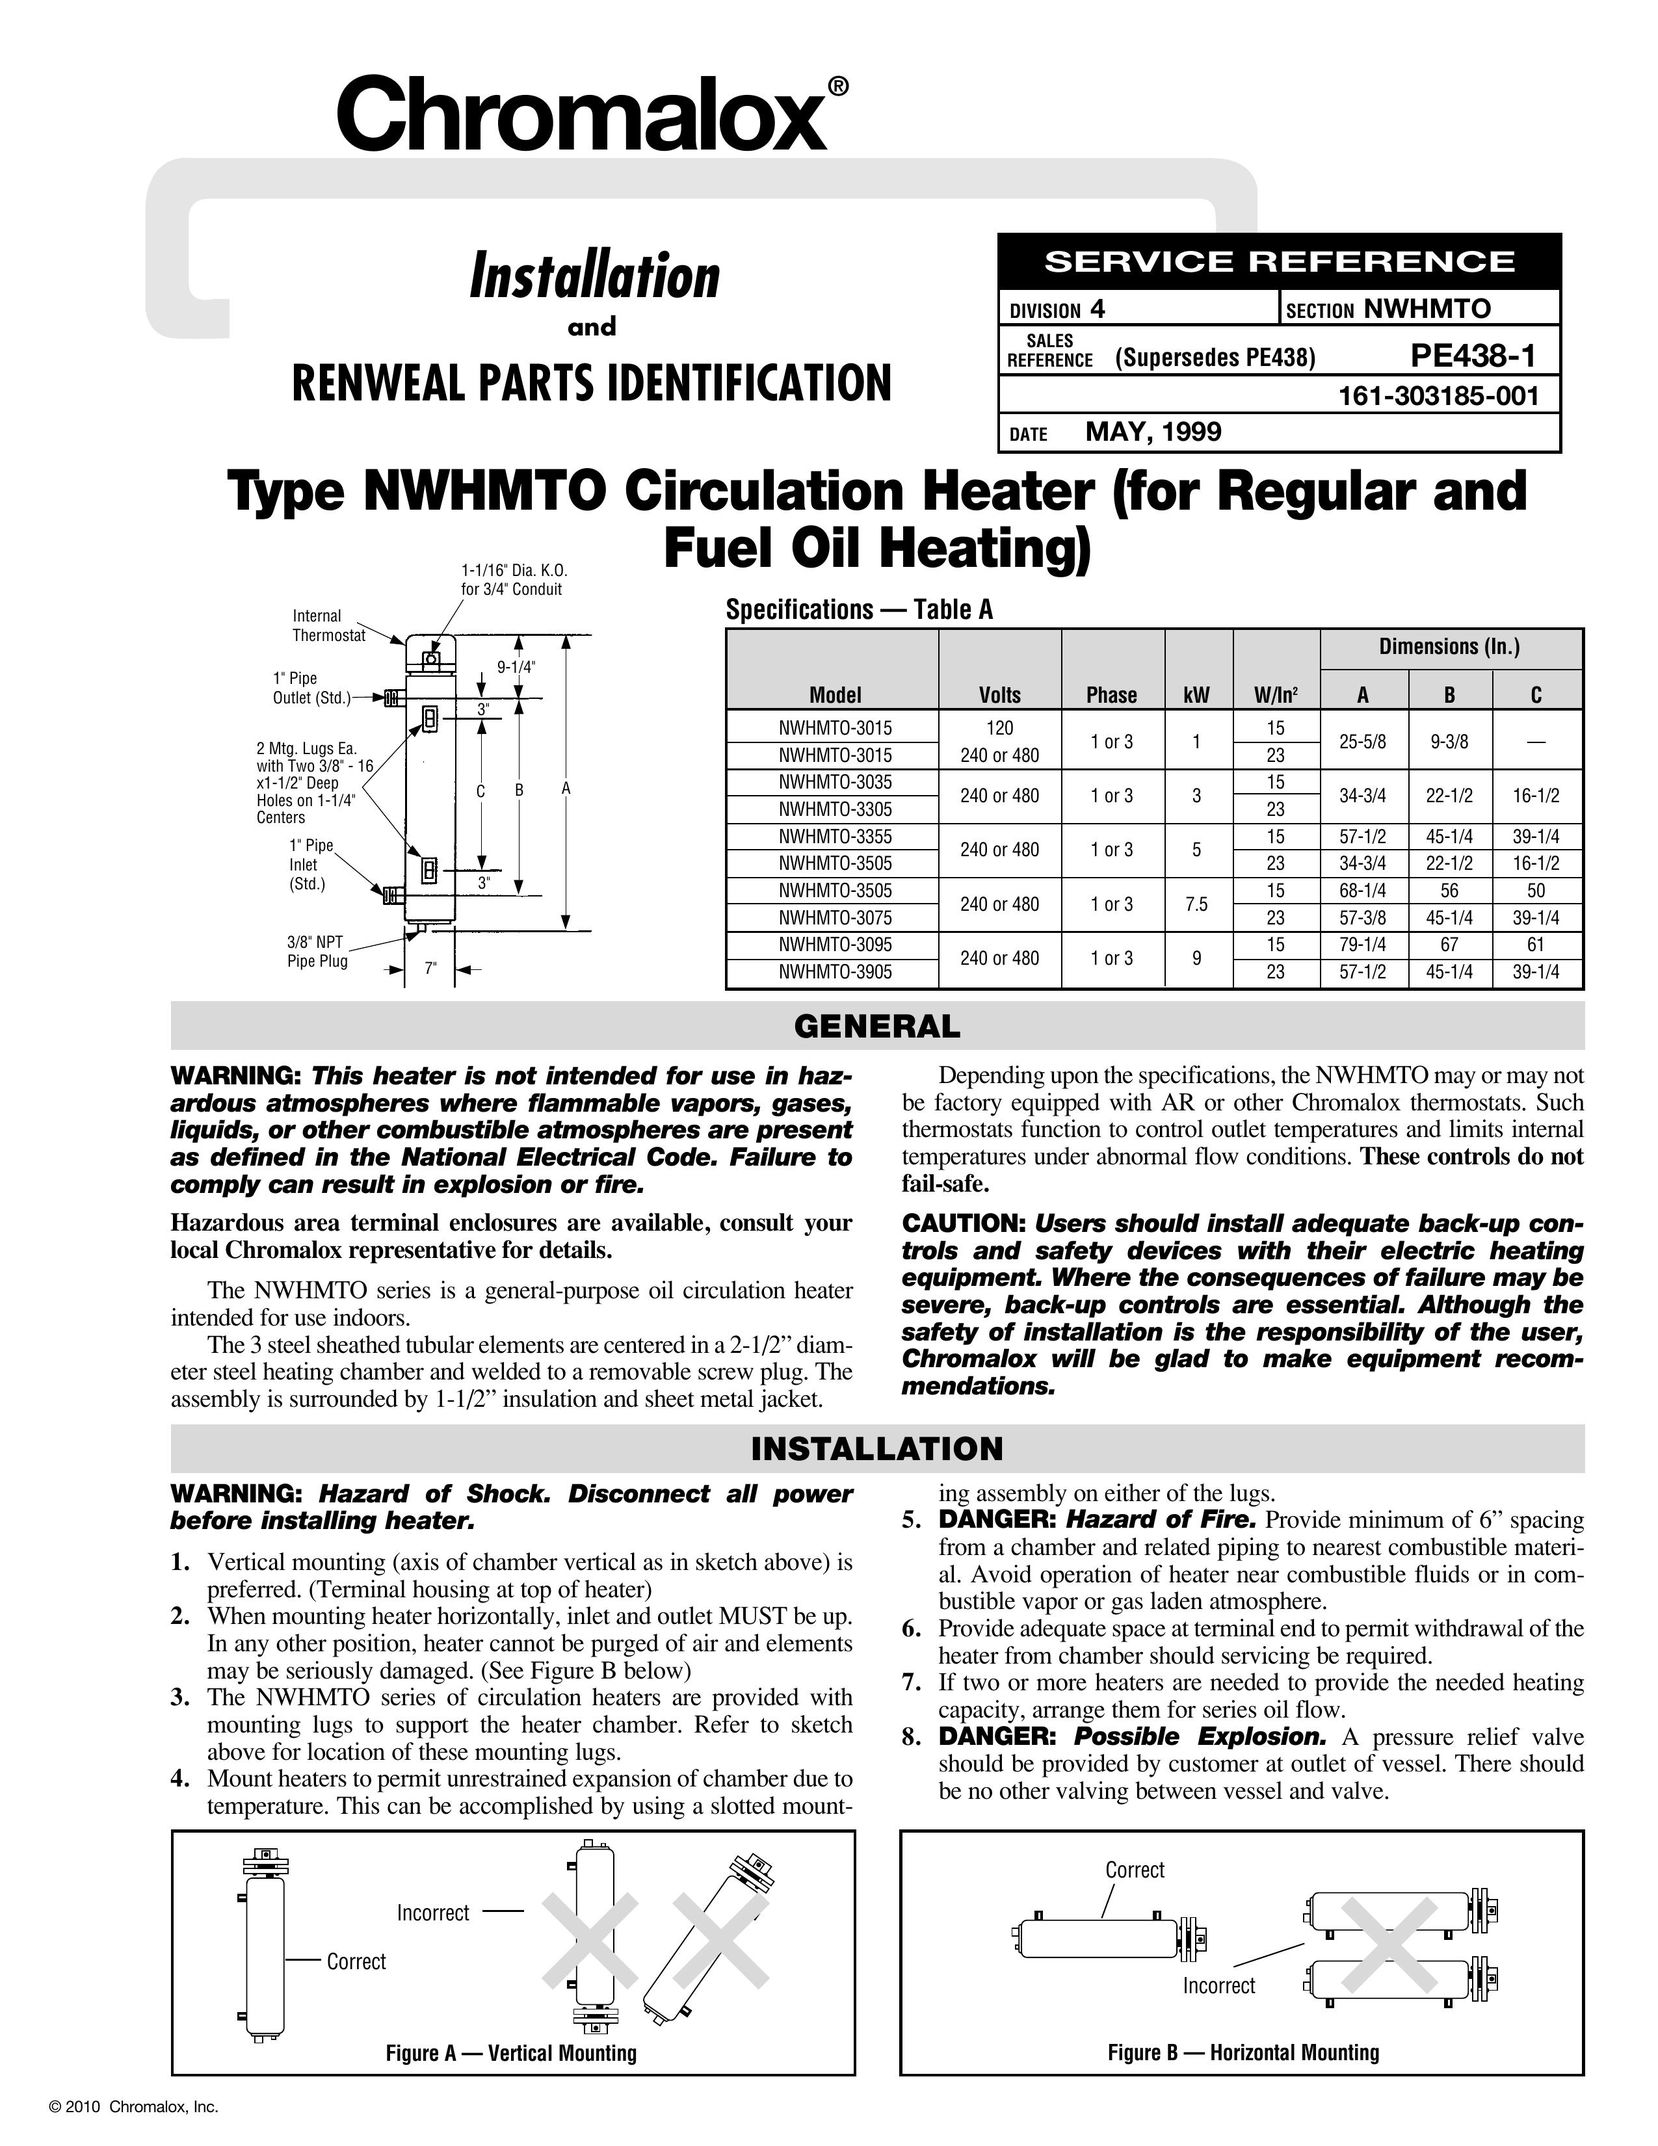 Chromalox NWHMTO Air Conditioner User Manual